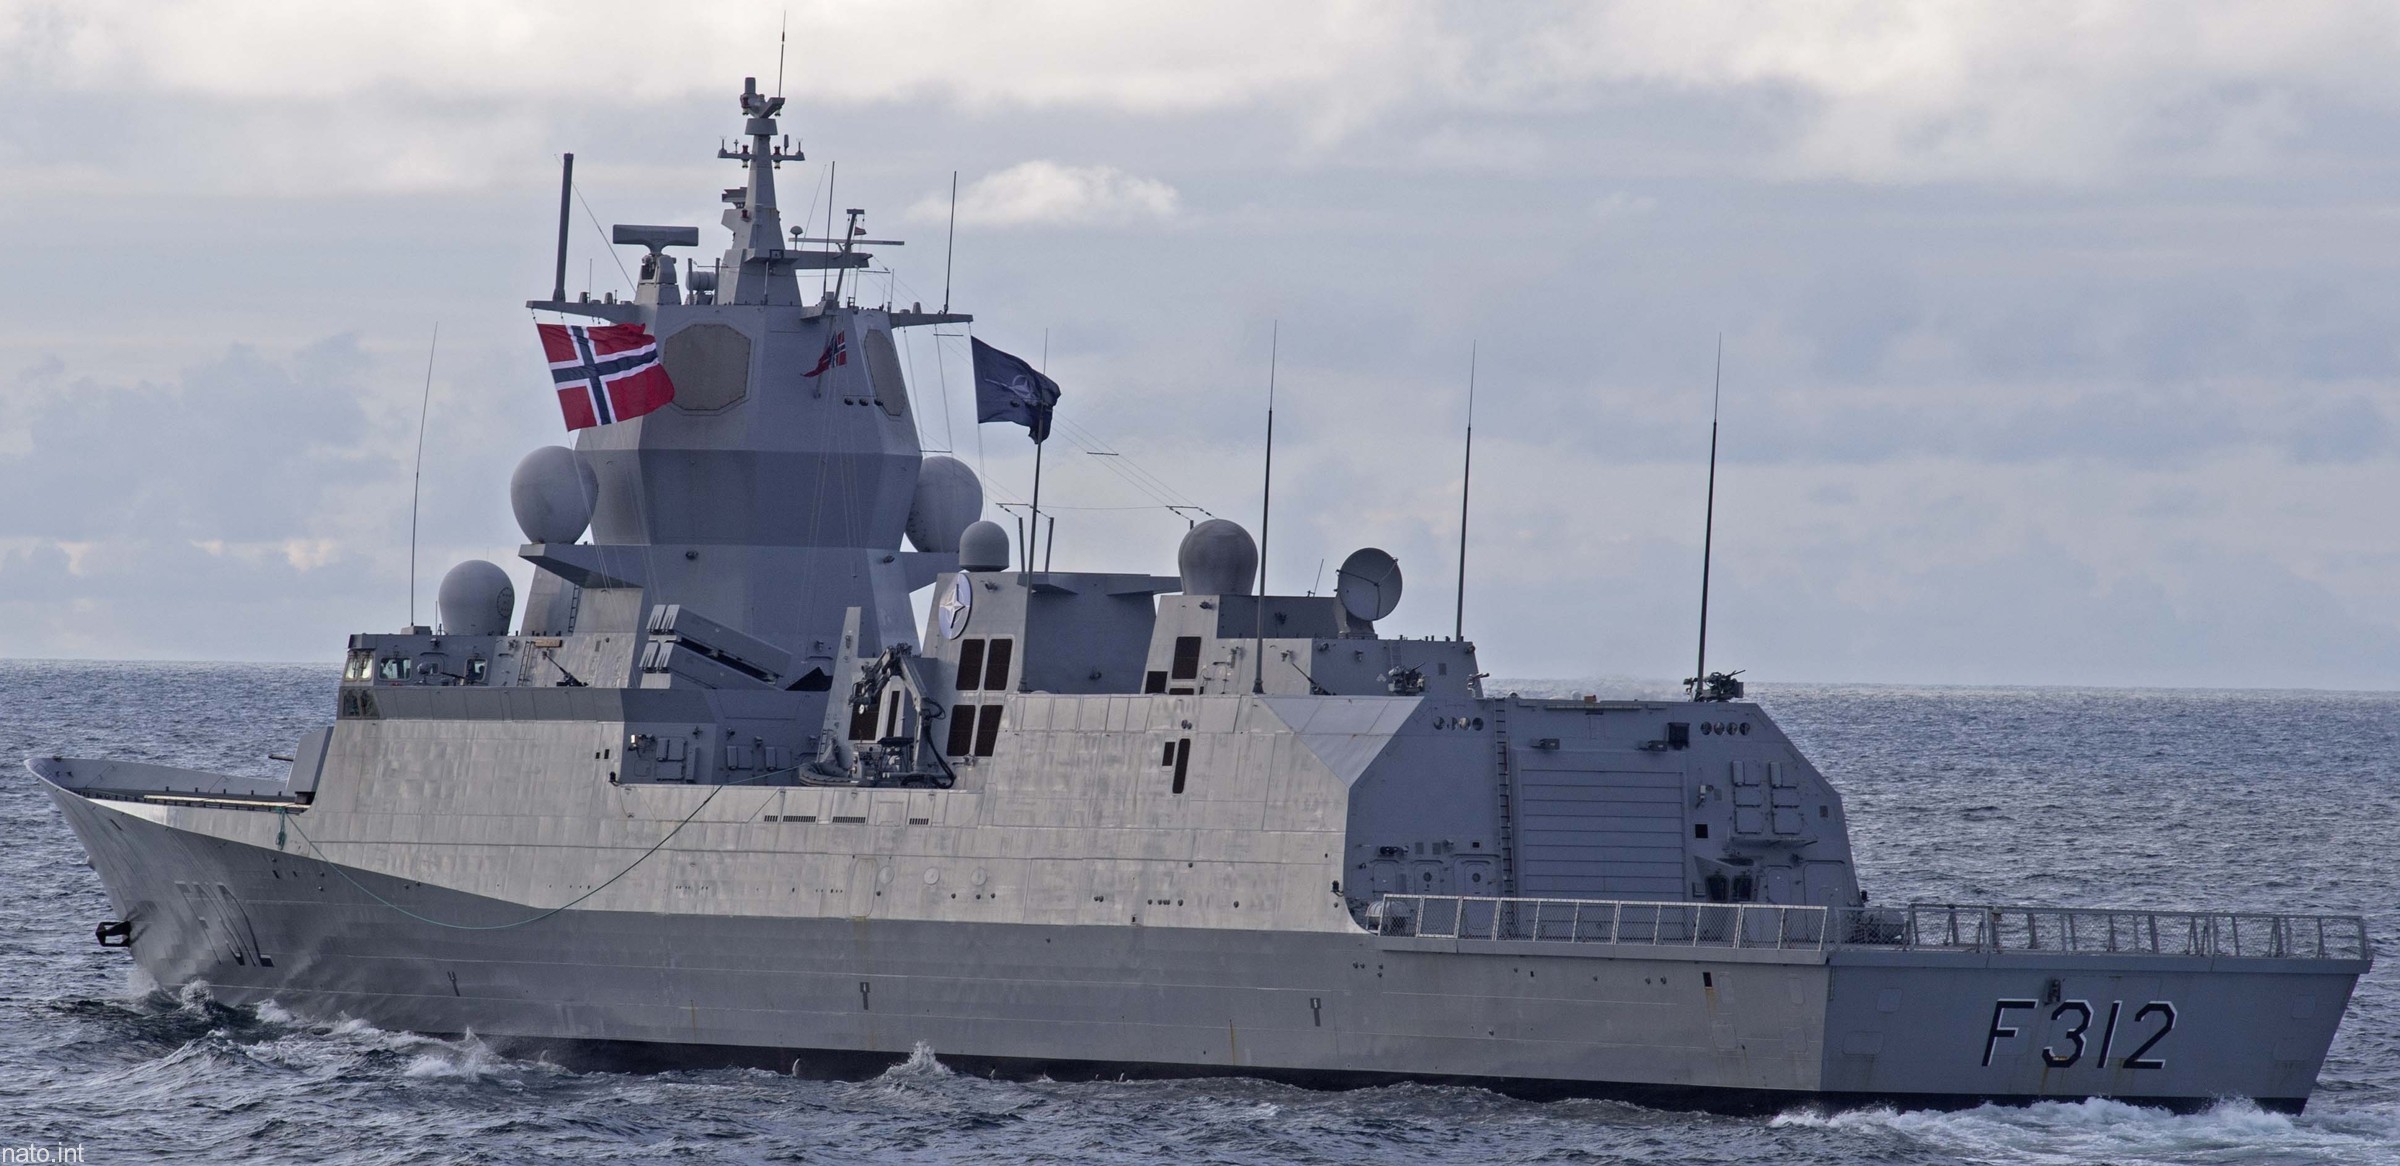 f-312 otto sverdrup hnoms knm fridtjof nansen class frigate royal norwegian navy 30